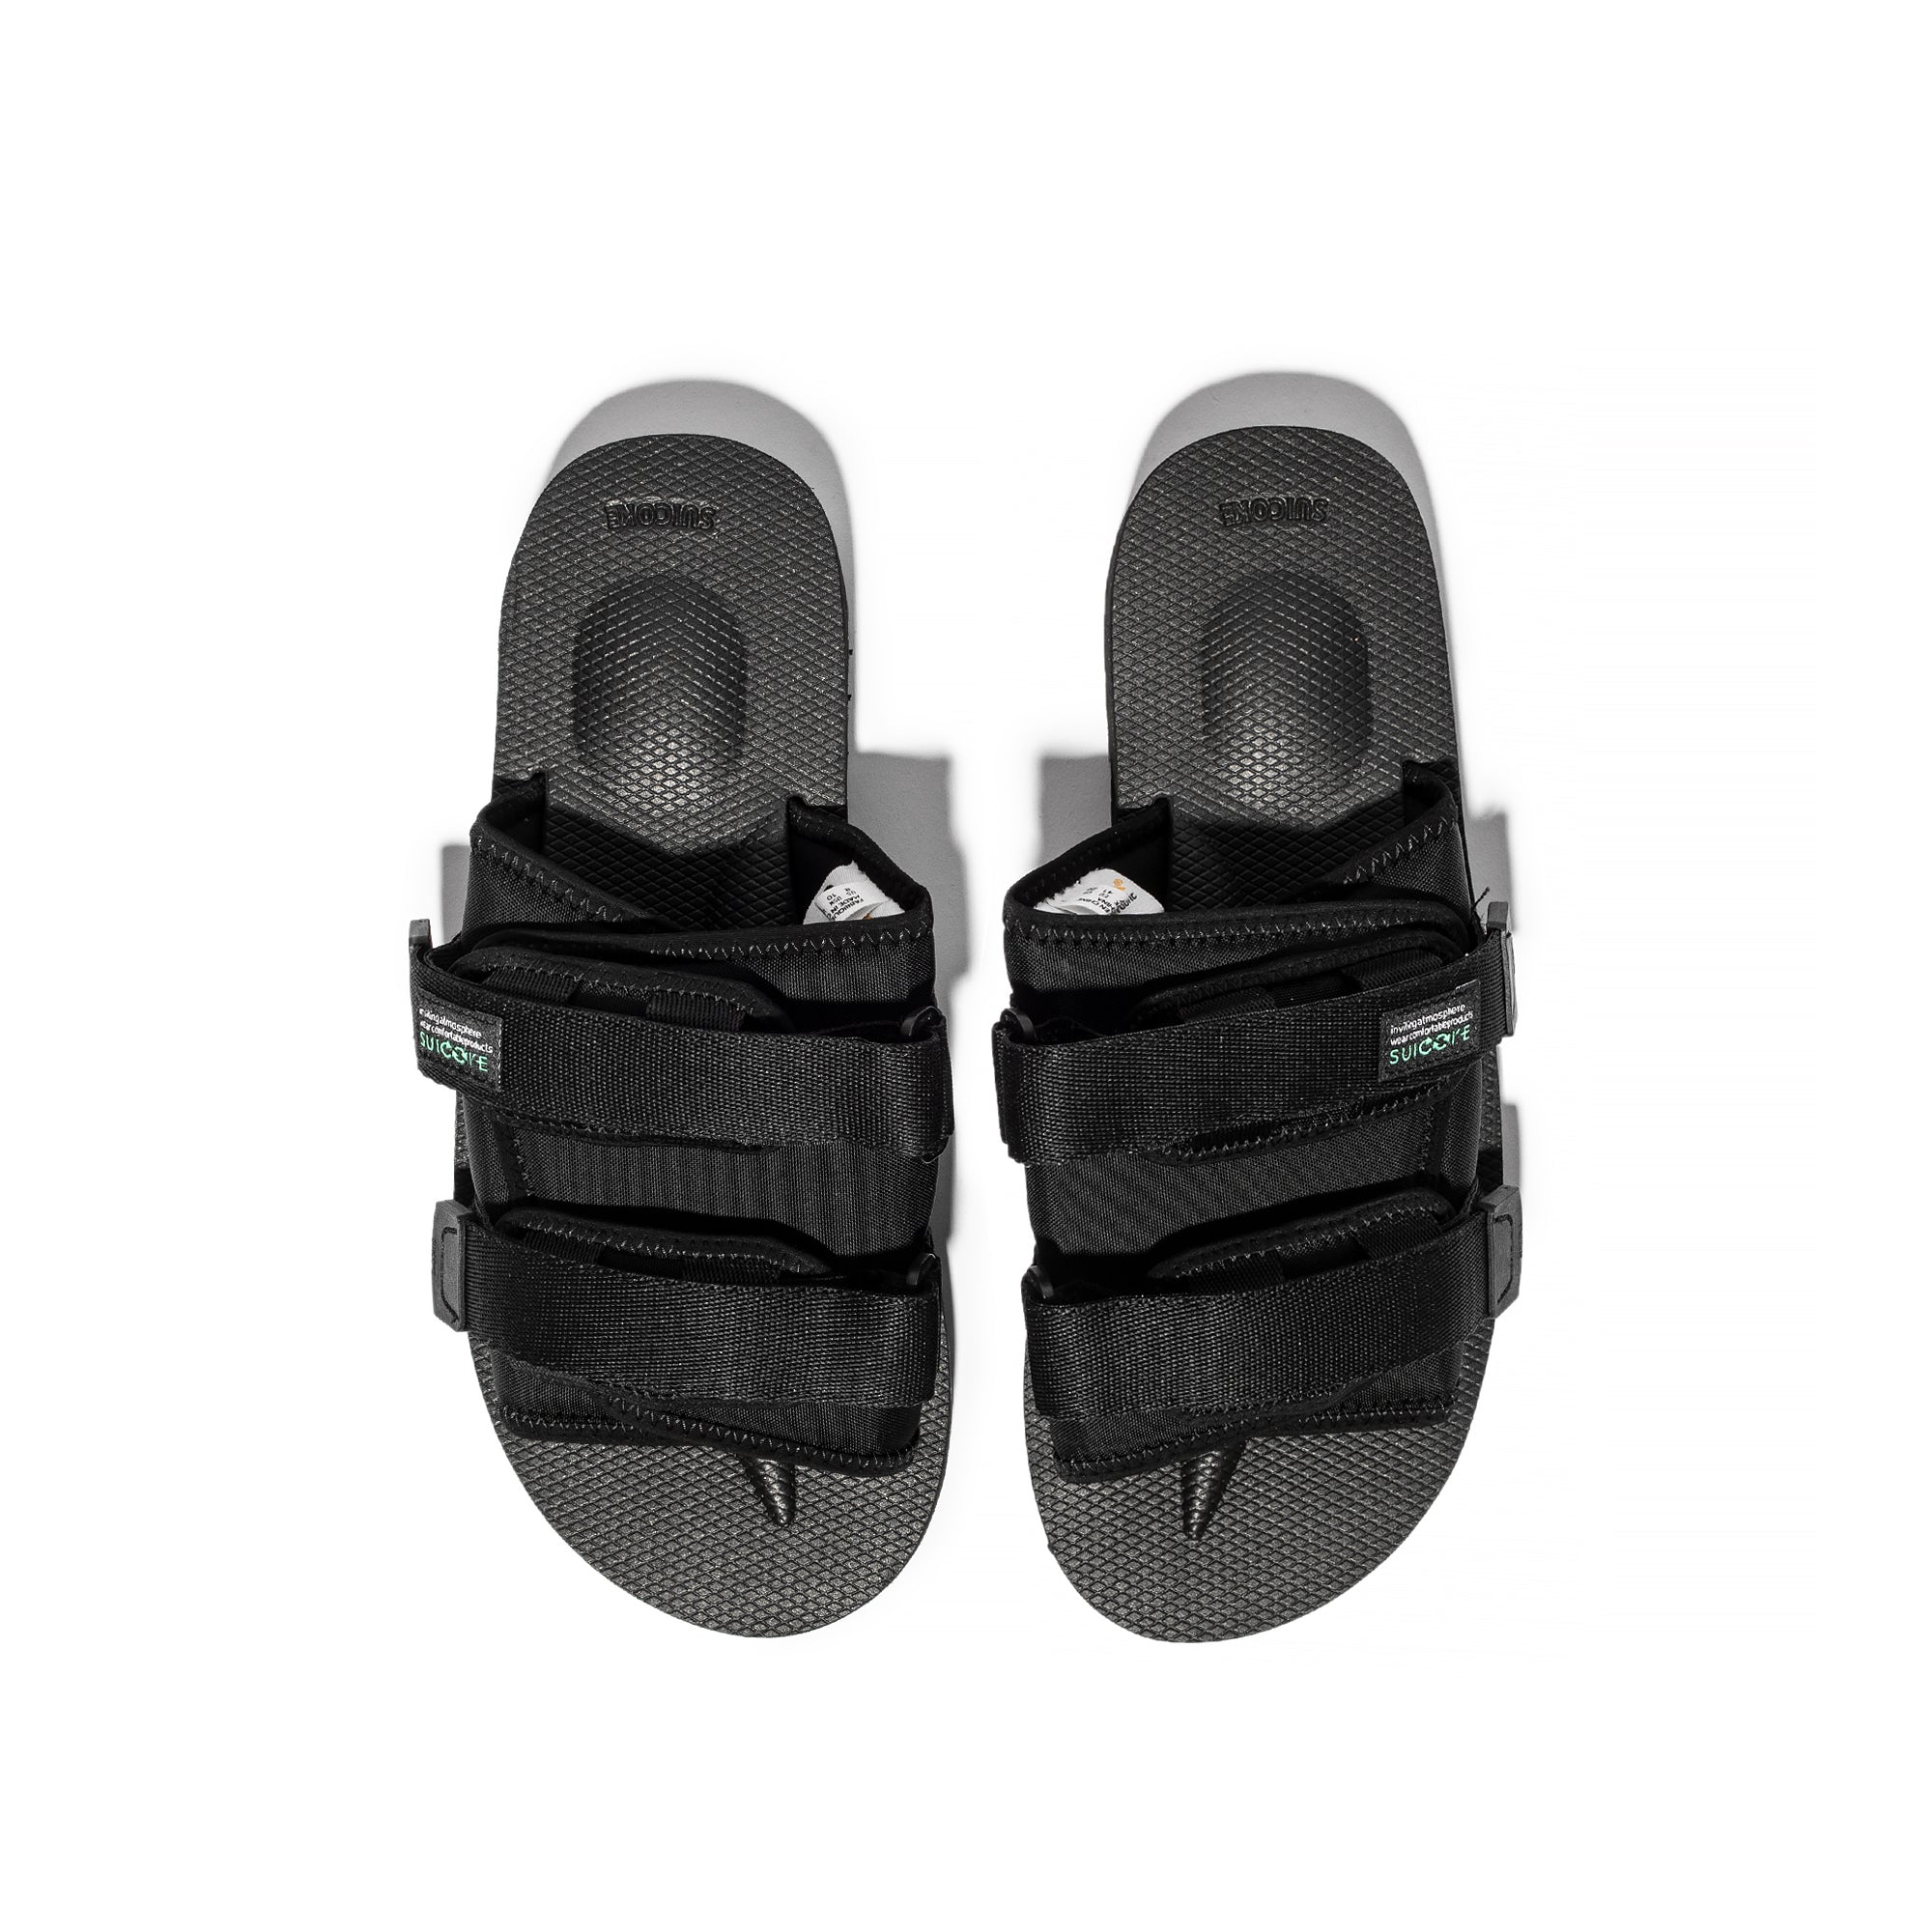 Suicoke Moto-Cab White Slide Sandals Womens Size 10 41 New